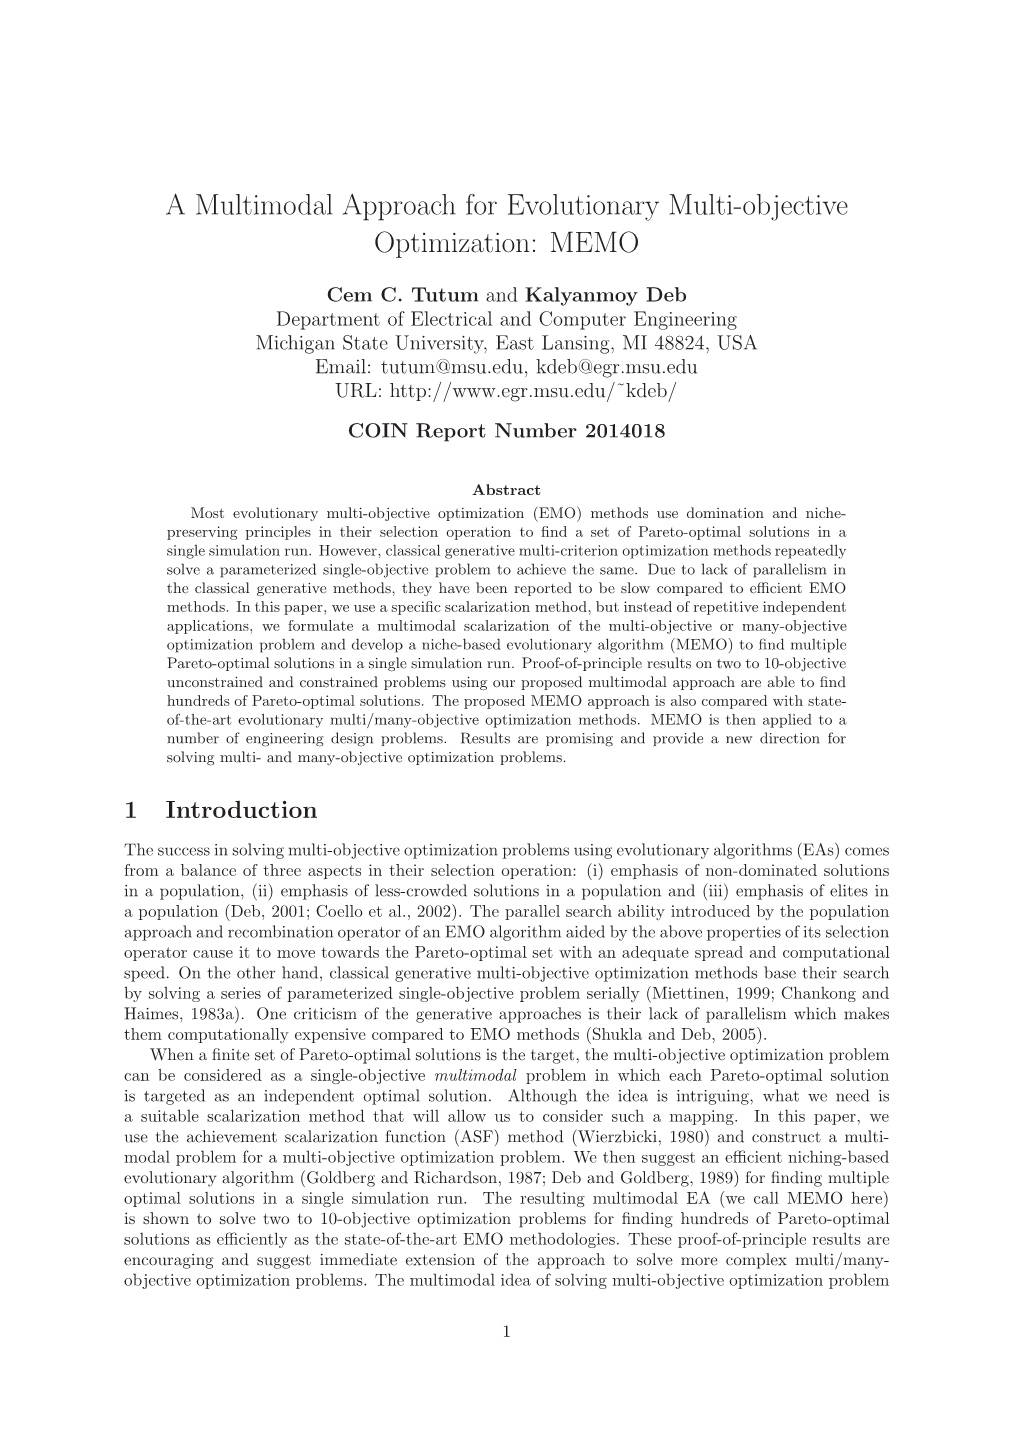 A Multimodal Approach for Evolutionary Multi-Objective Optimization: MEMO